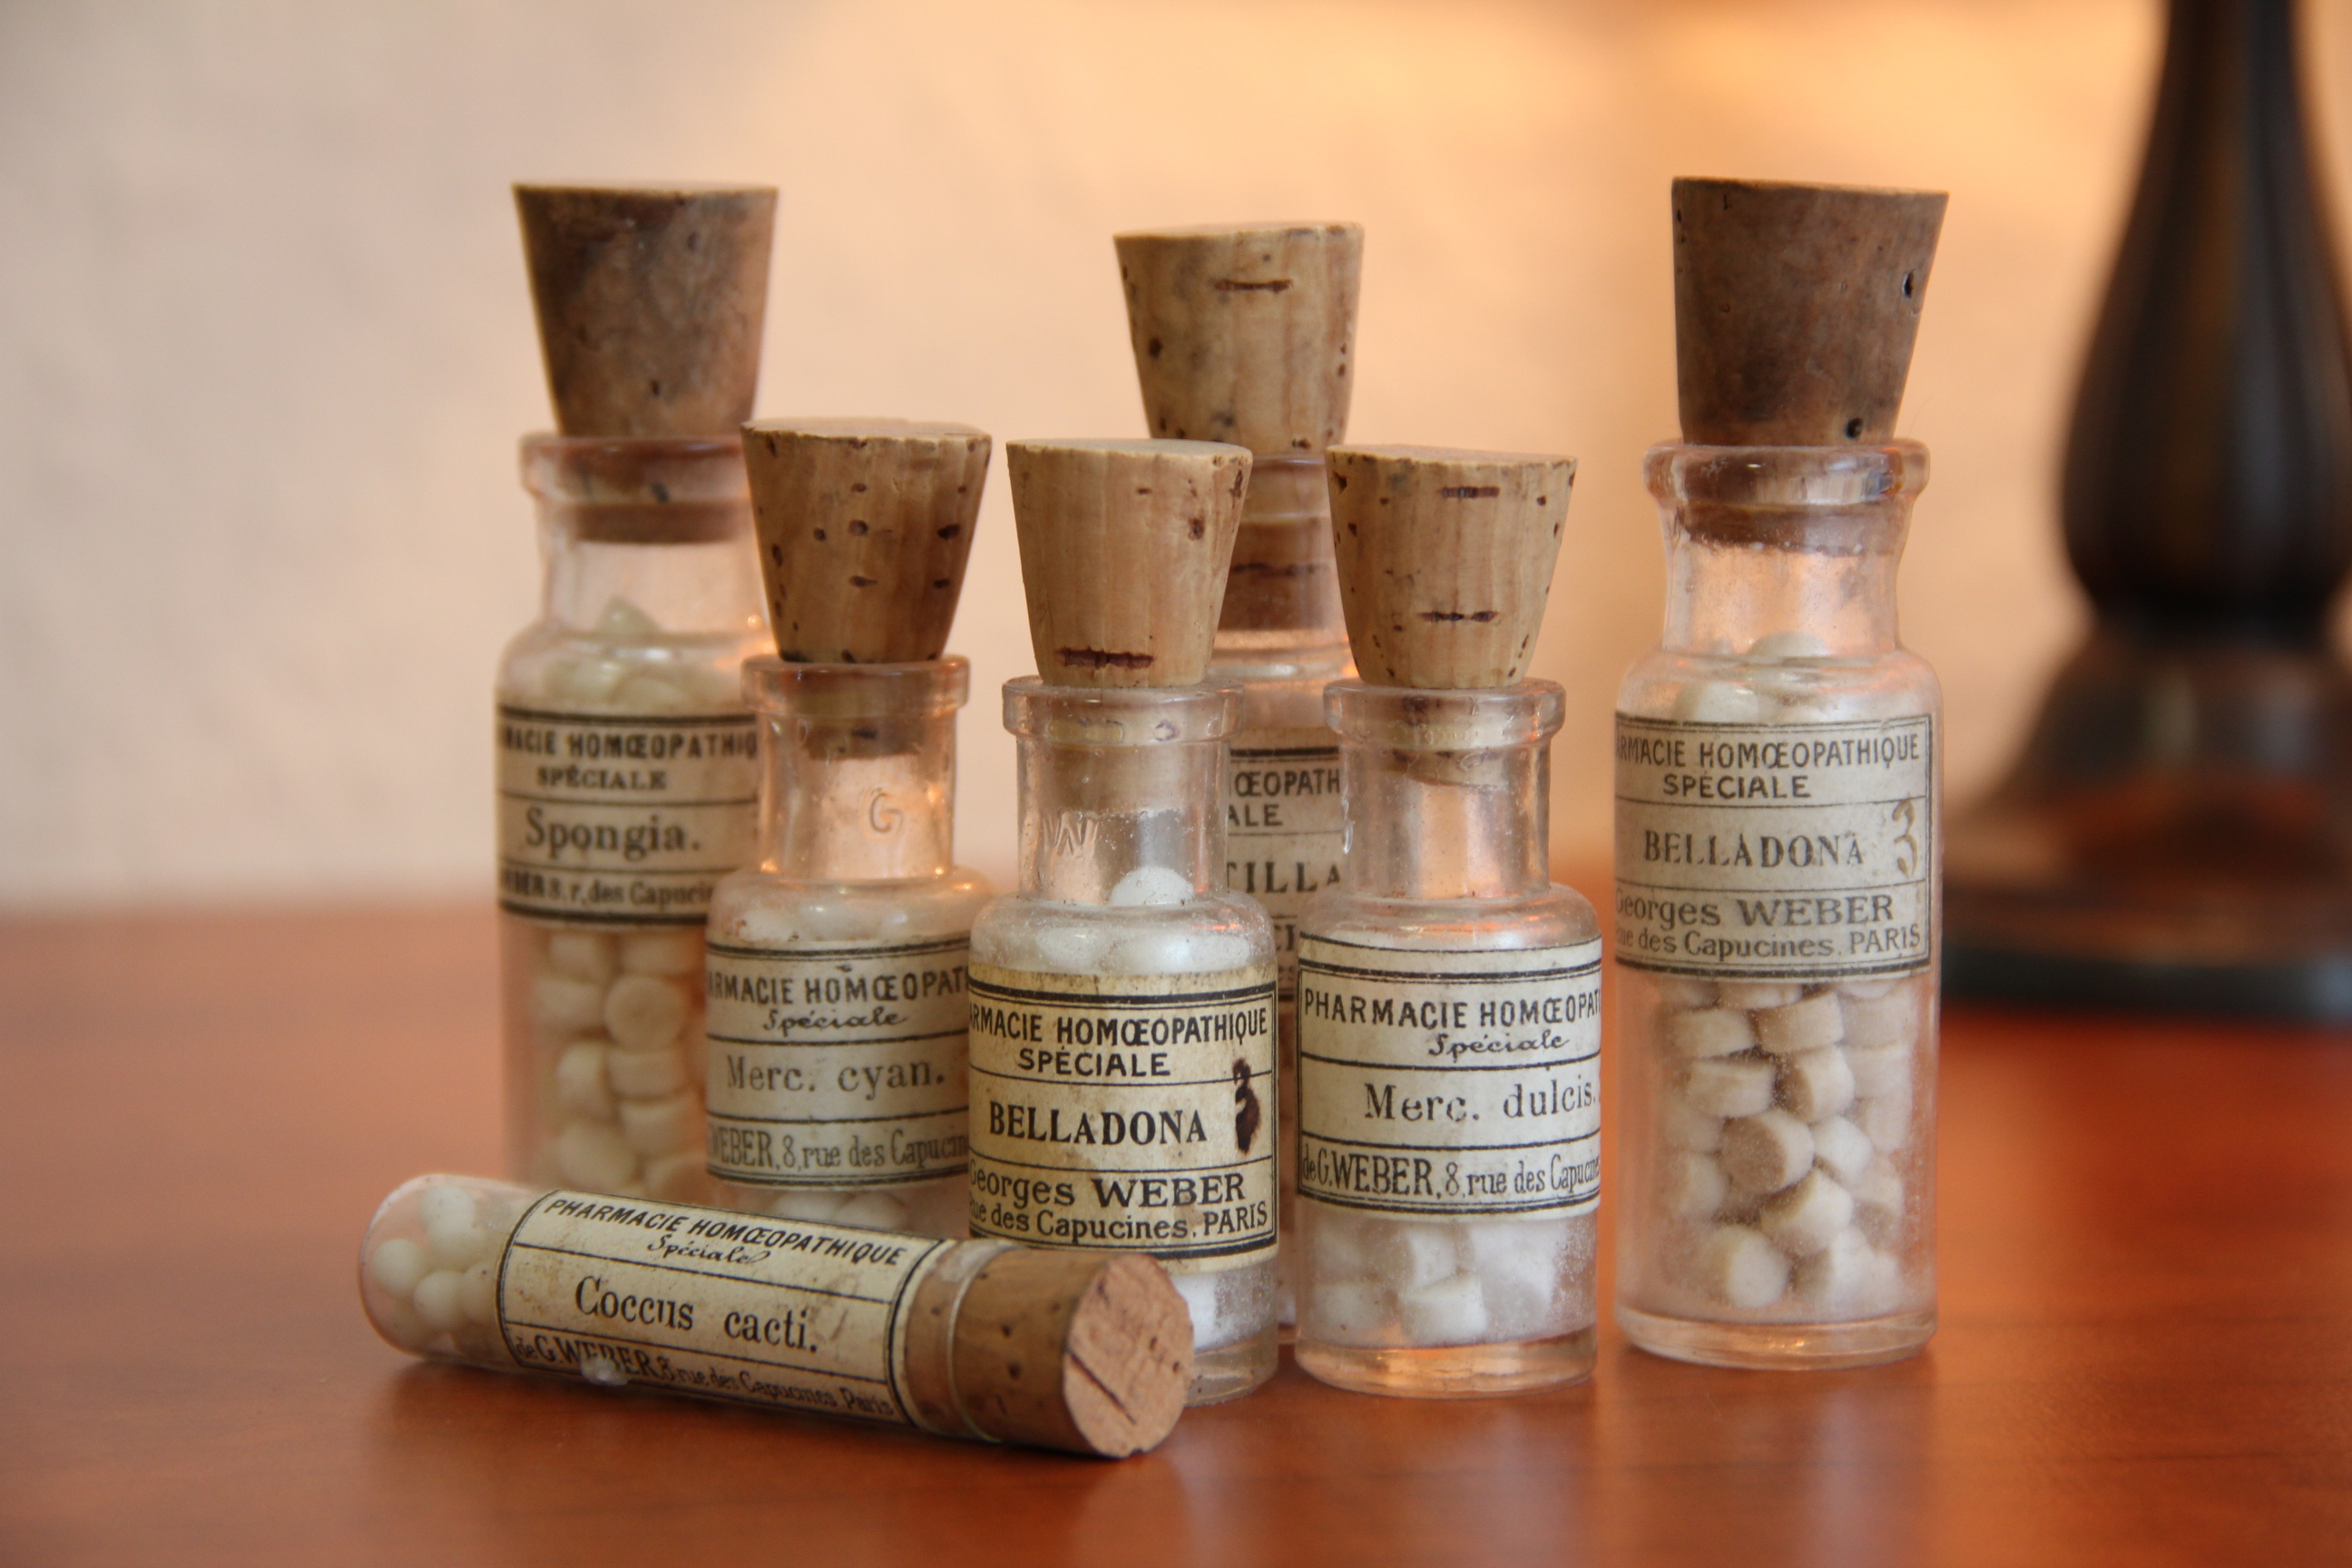 Diferentes remedios homeopáticos. Fuente: http://www.avicenna-med.hu/